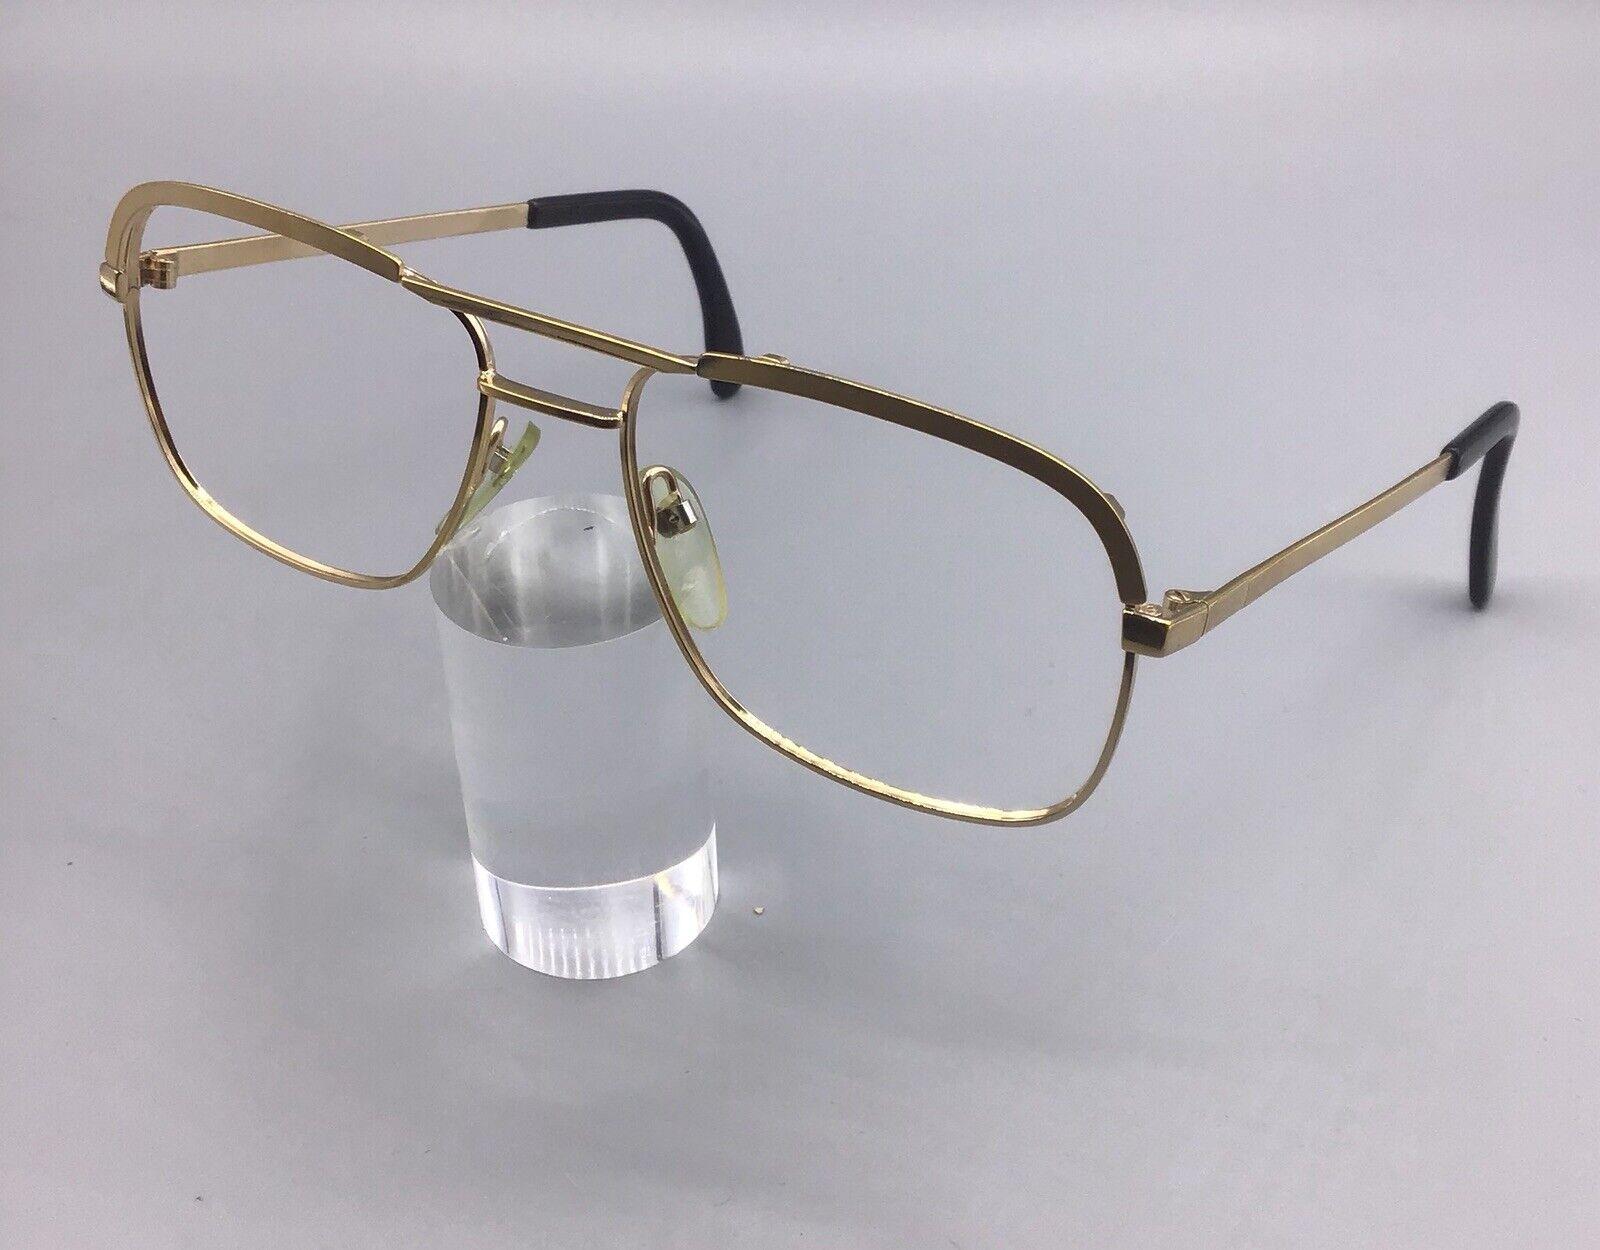 Silhouette mod 312 Vintage occhiale gold frame eyewear glasses brillen lunettes